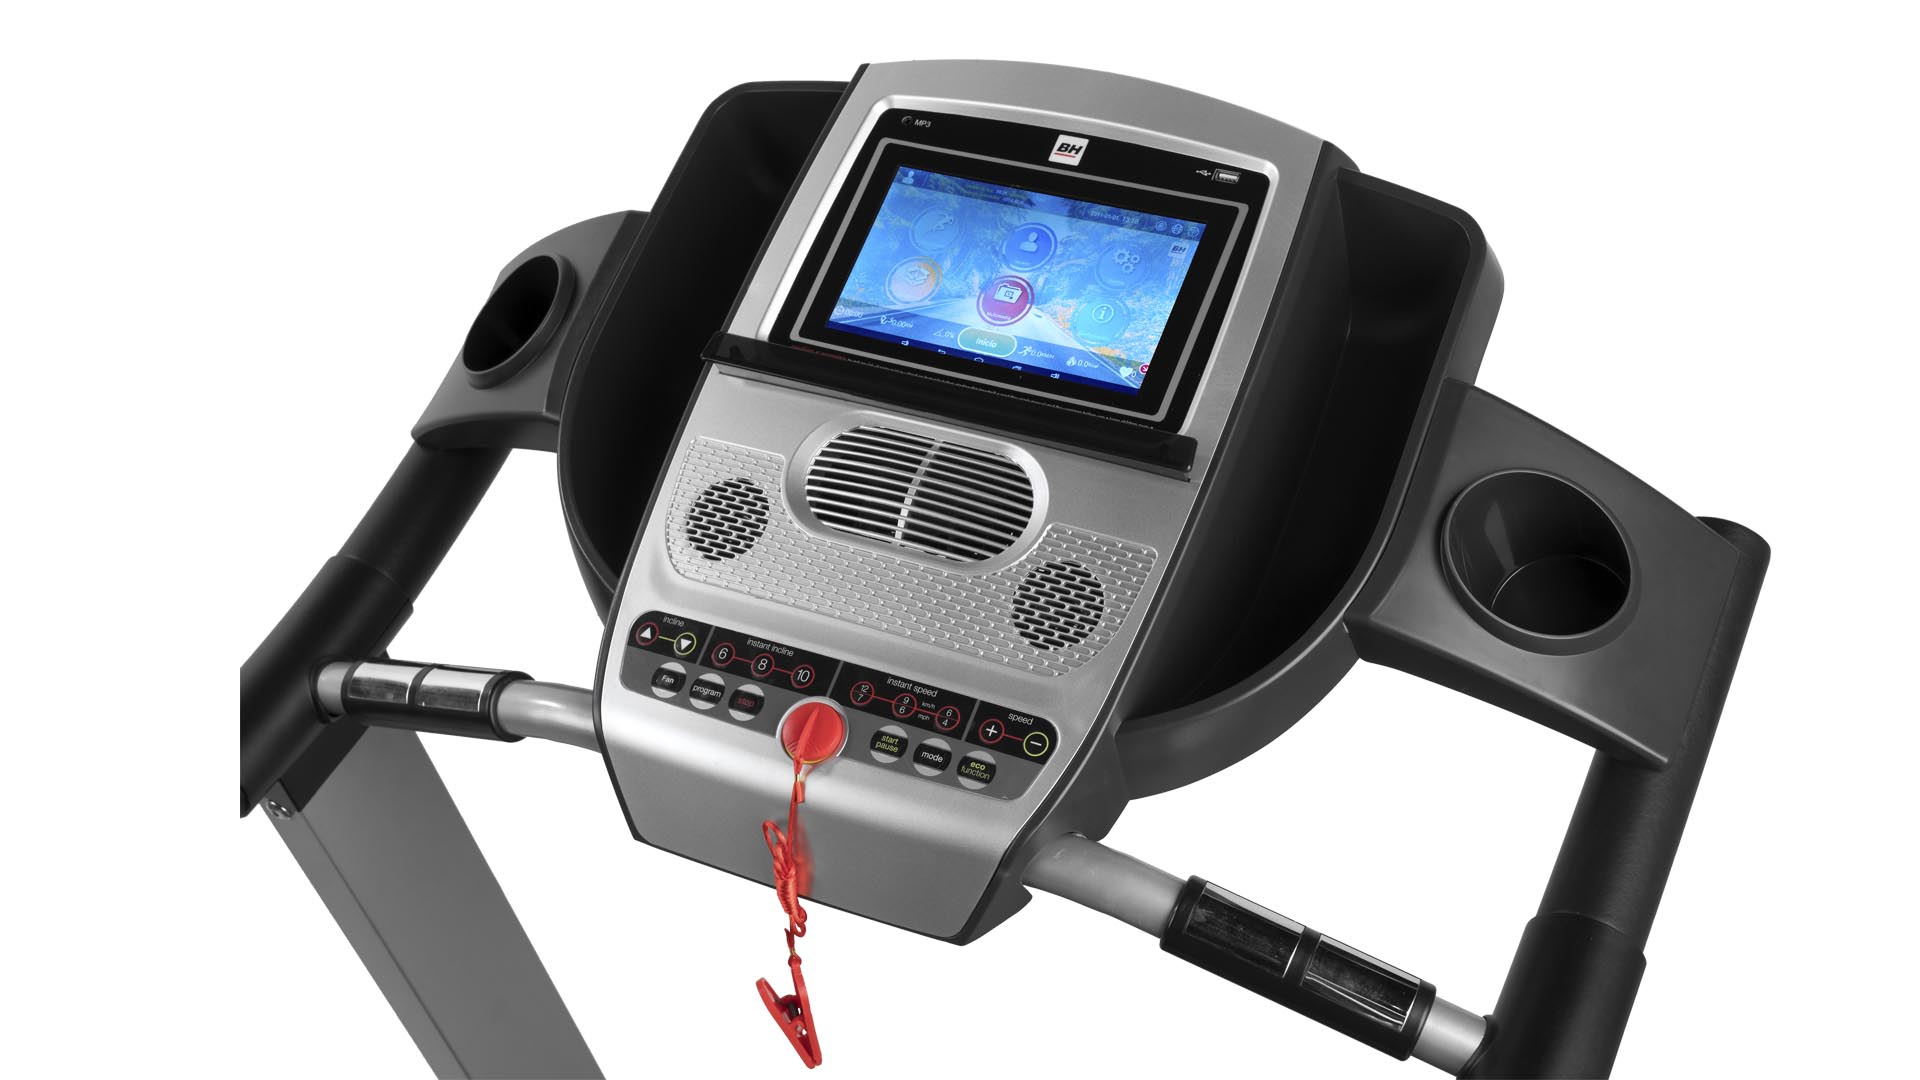 Bh Fitness Pioneer R7 TFT Home Treadmill